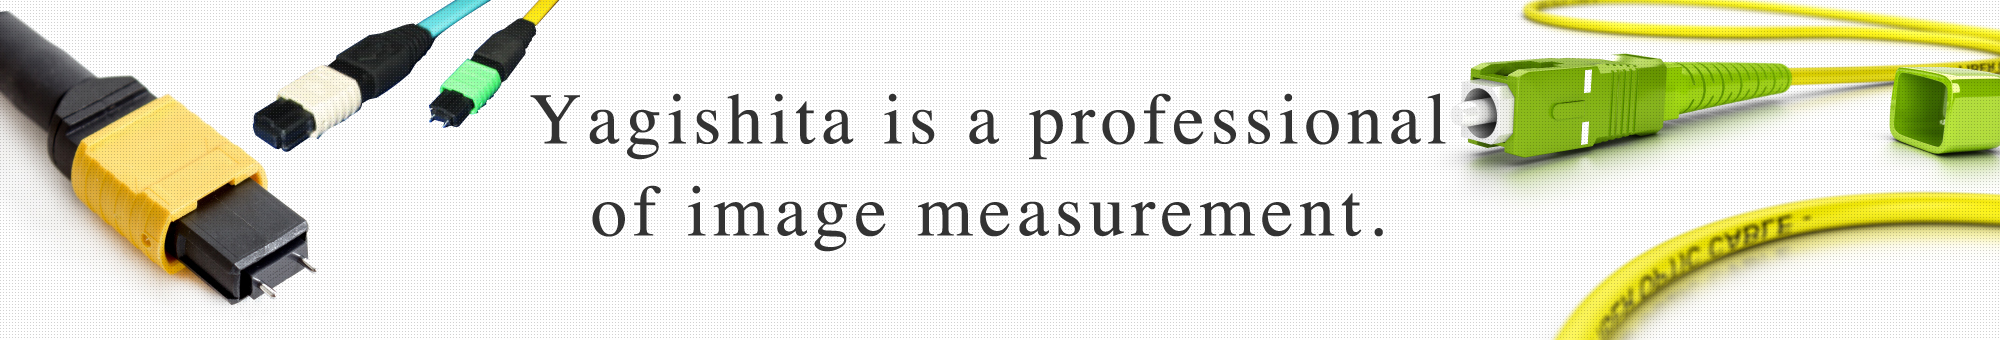 Yagishita is a professional of image measurement